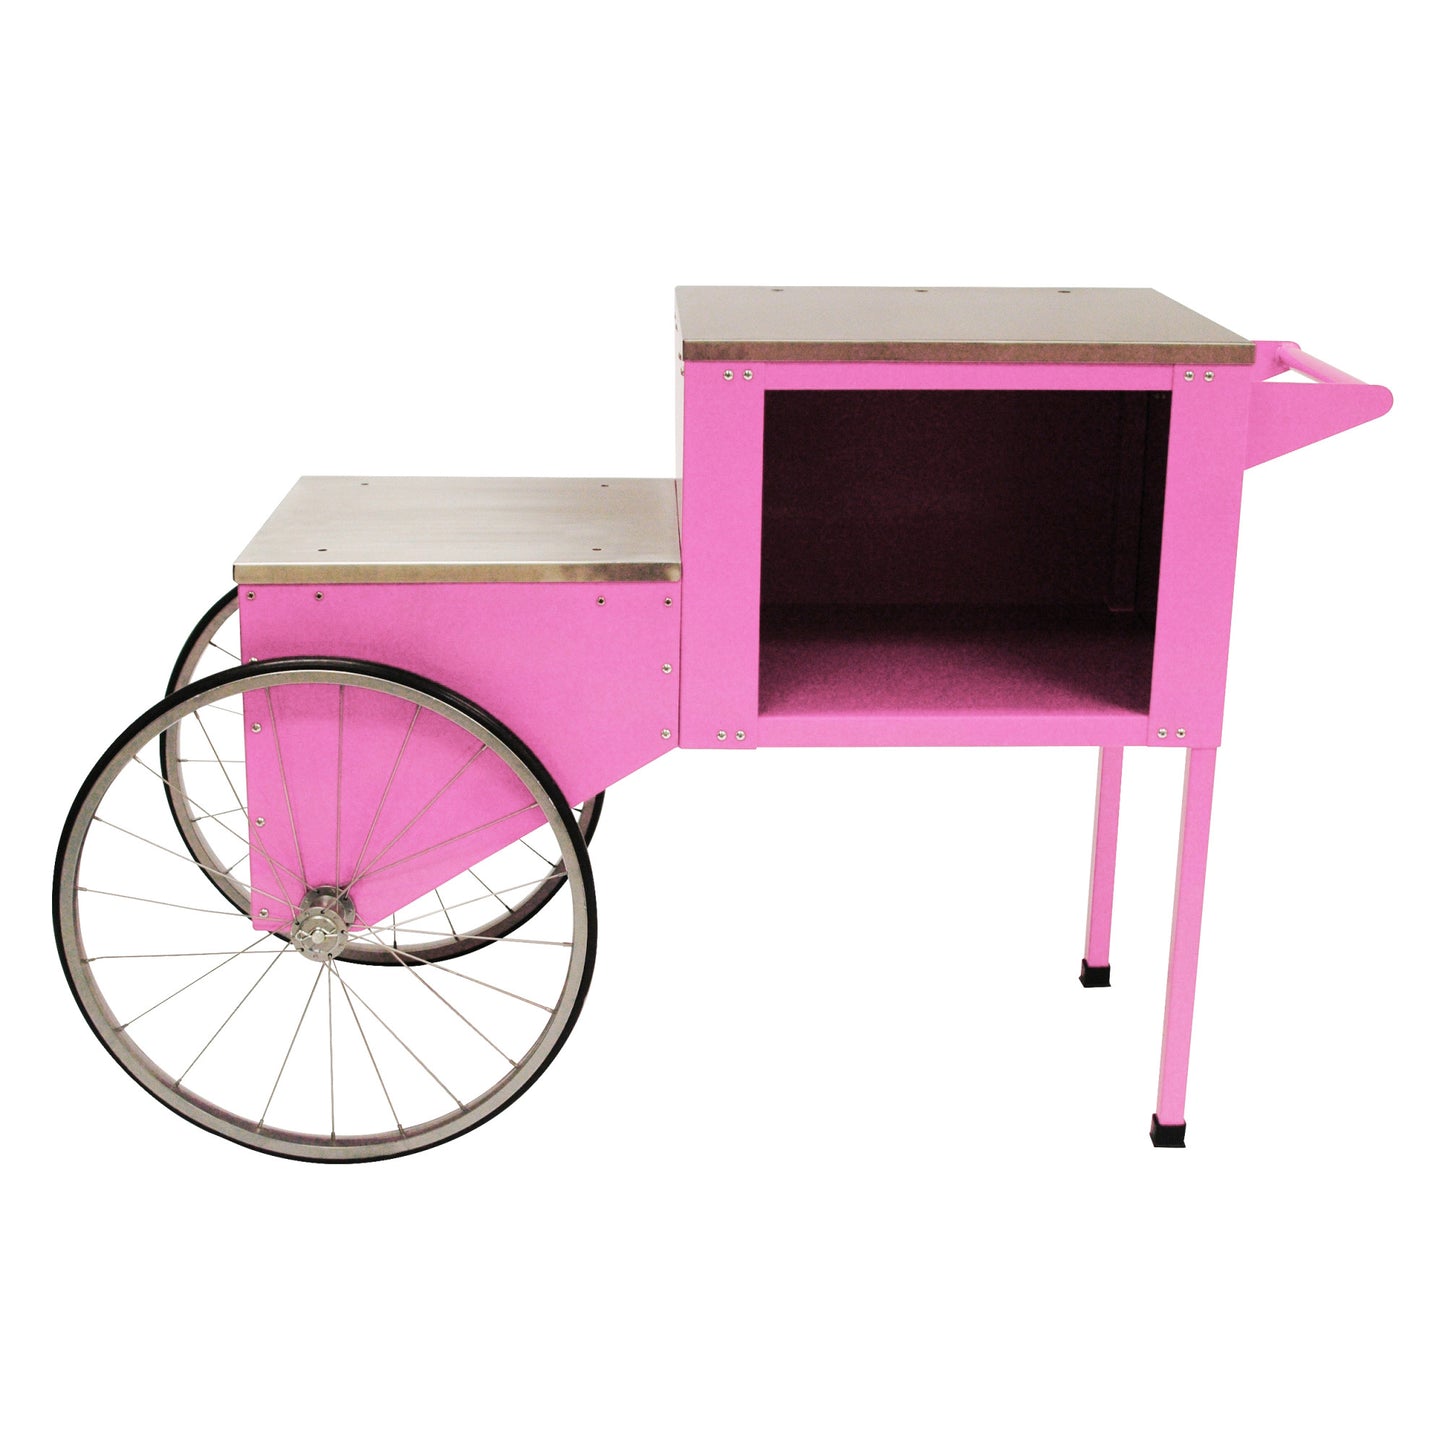 30090 - BenchmarkUSA "Zephyr" Cotton Candy Machine Cart